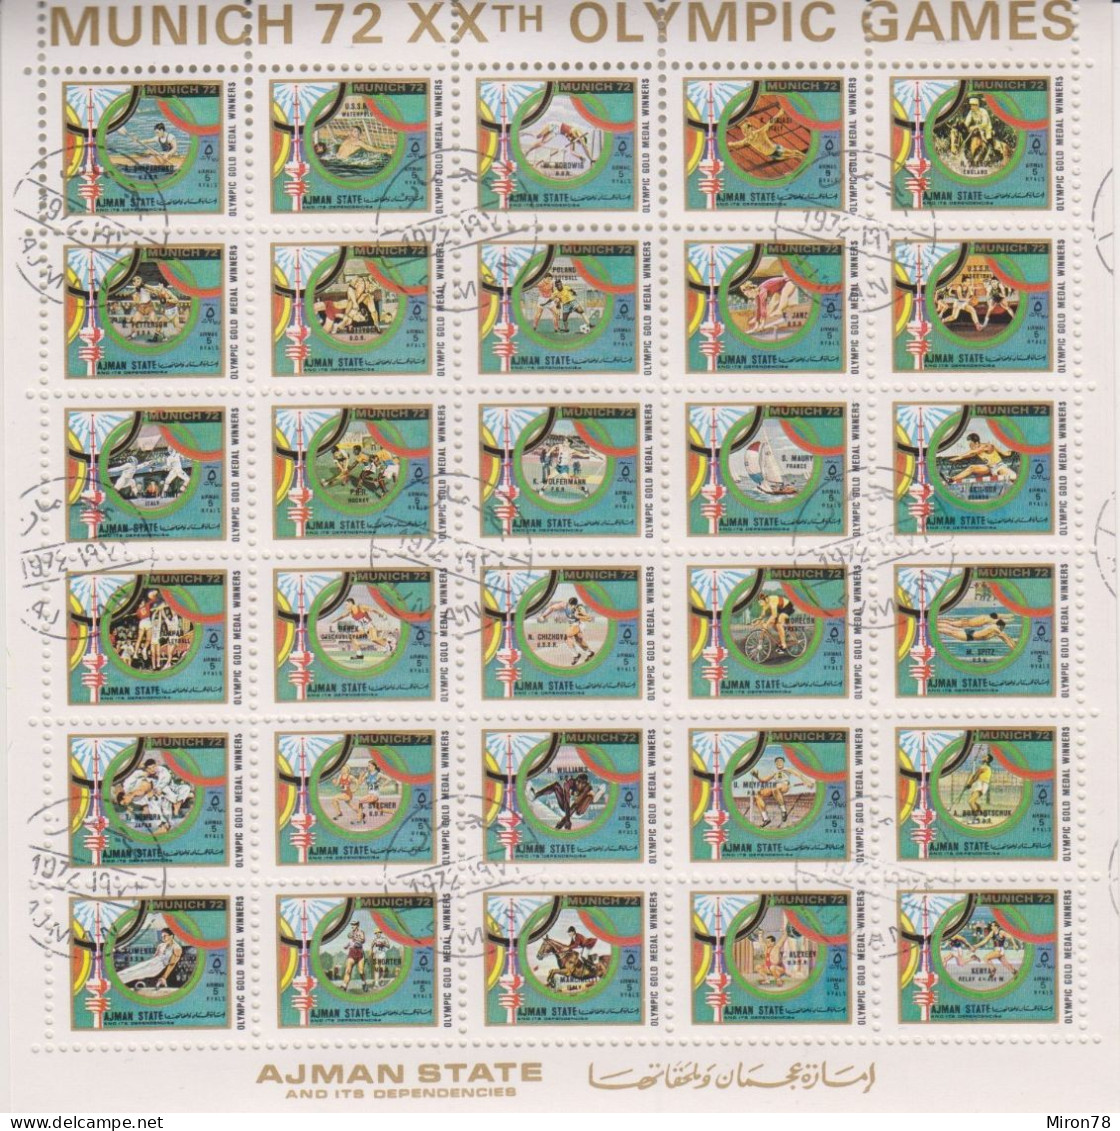 AJMAN OLYMPIC GAMES MUNICH 1972 #1605-34 SH USED (MNH-MICHEL 150 EURO!!!) - Sommer 1972: München